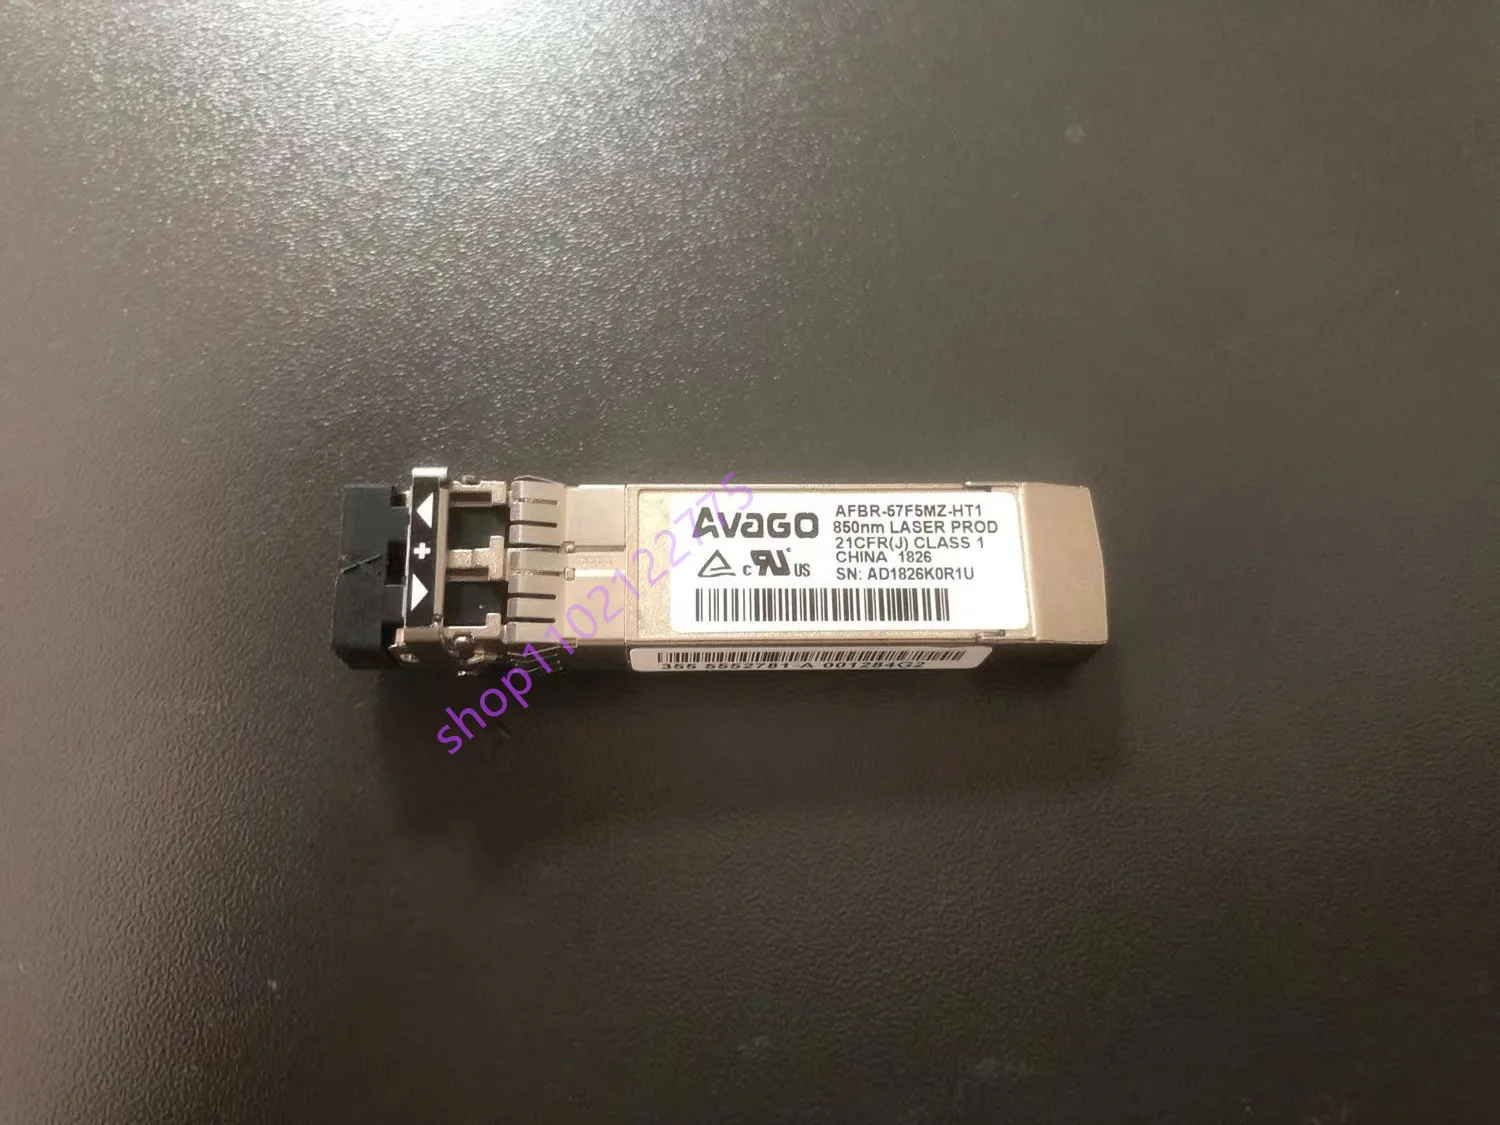 AVAGO SFP 16gb switch module AFBR-57F5MZ-HT1 335 5552781-A storage transceiver sfp 16g/16g fiber switch/16g sfp fiber module enlarge